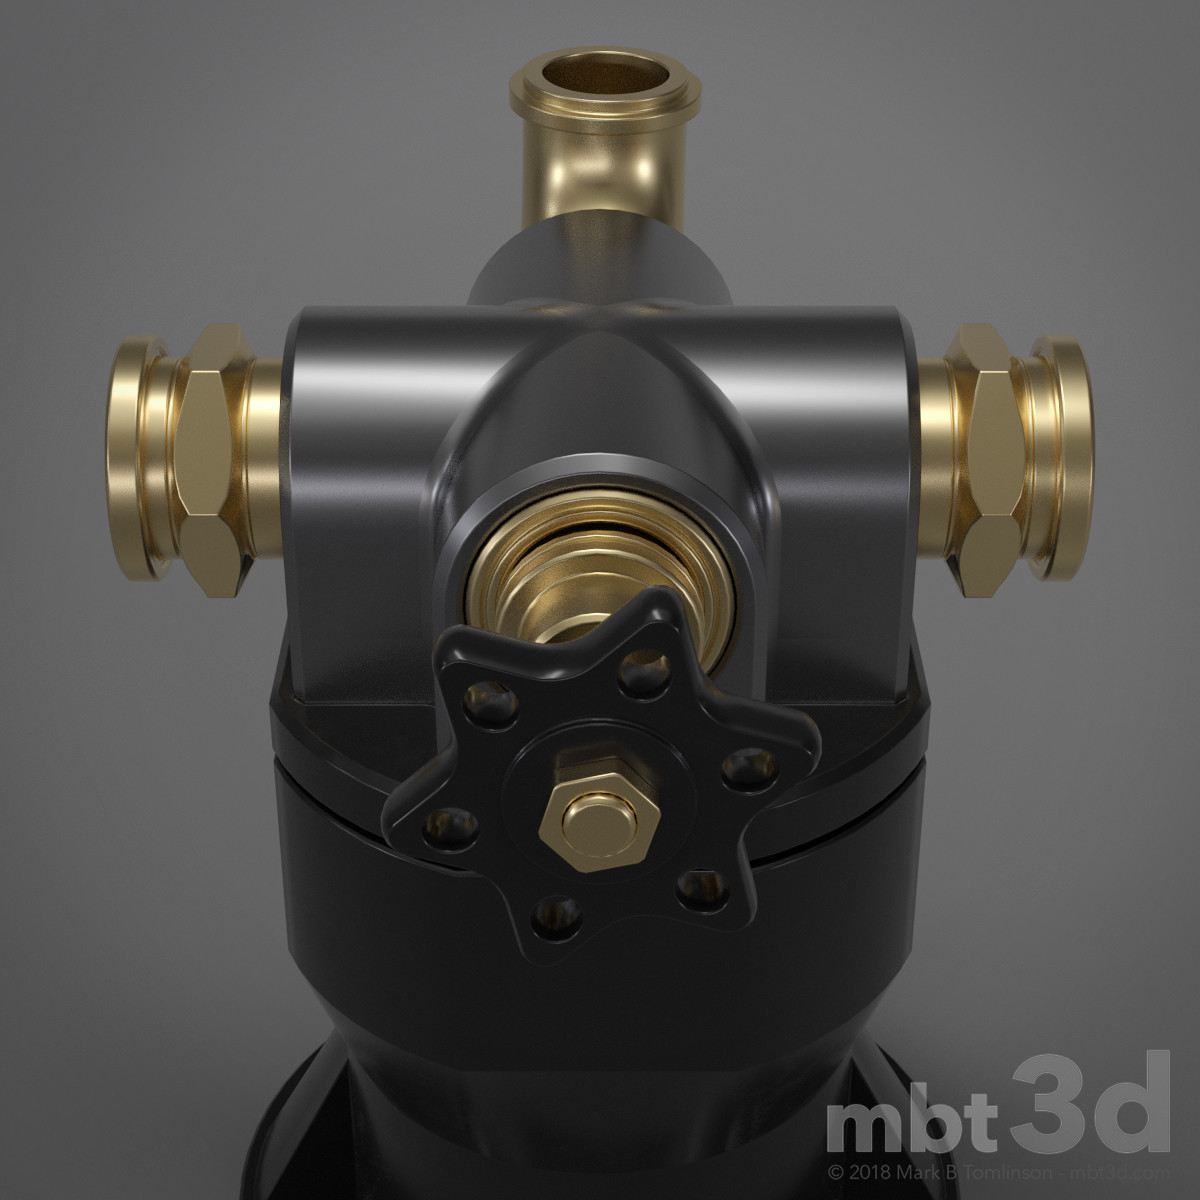 Box XVII: Hard surface model valve handle